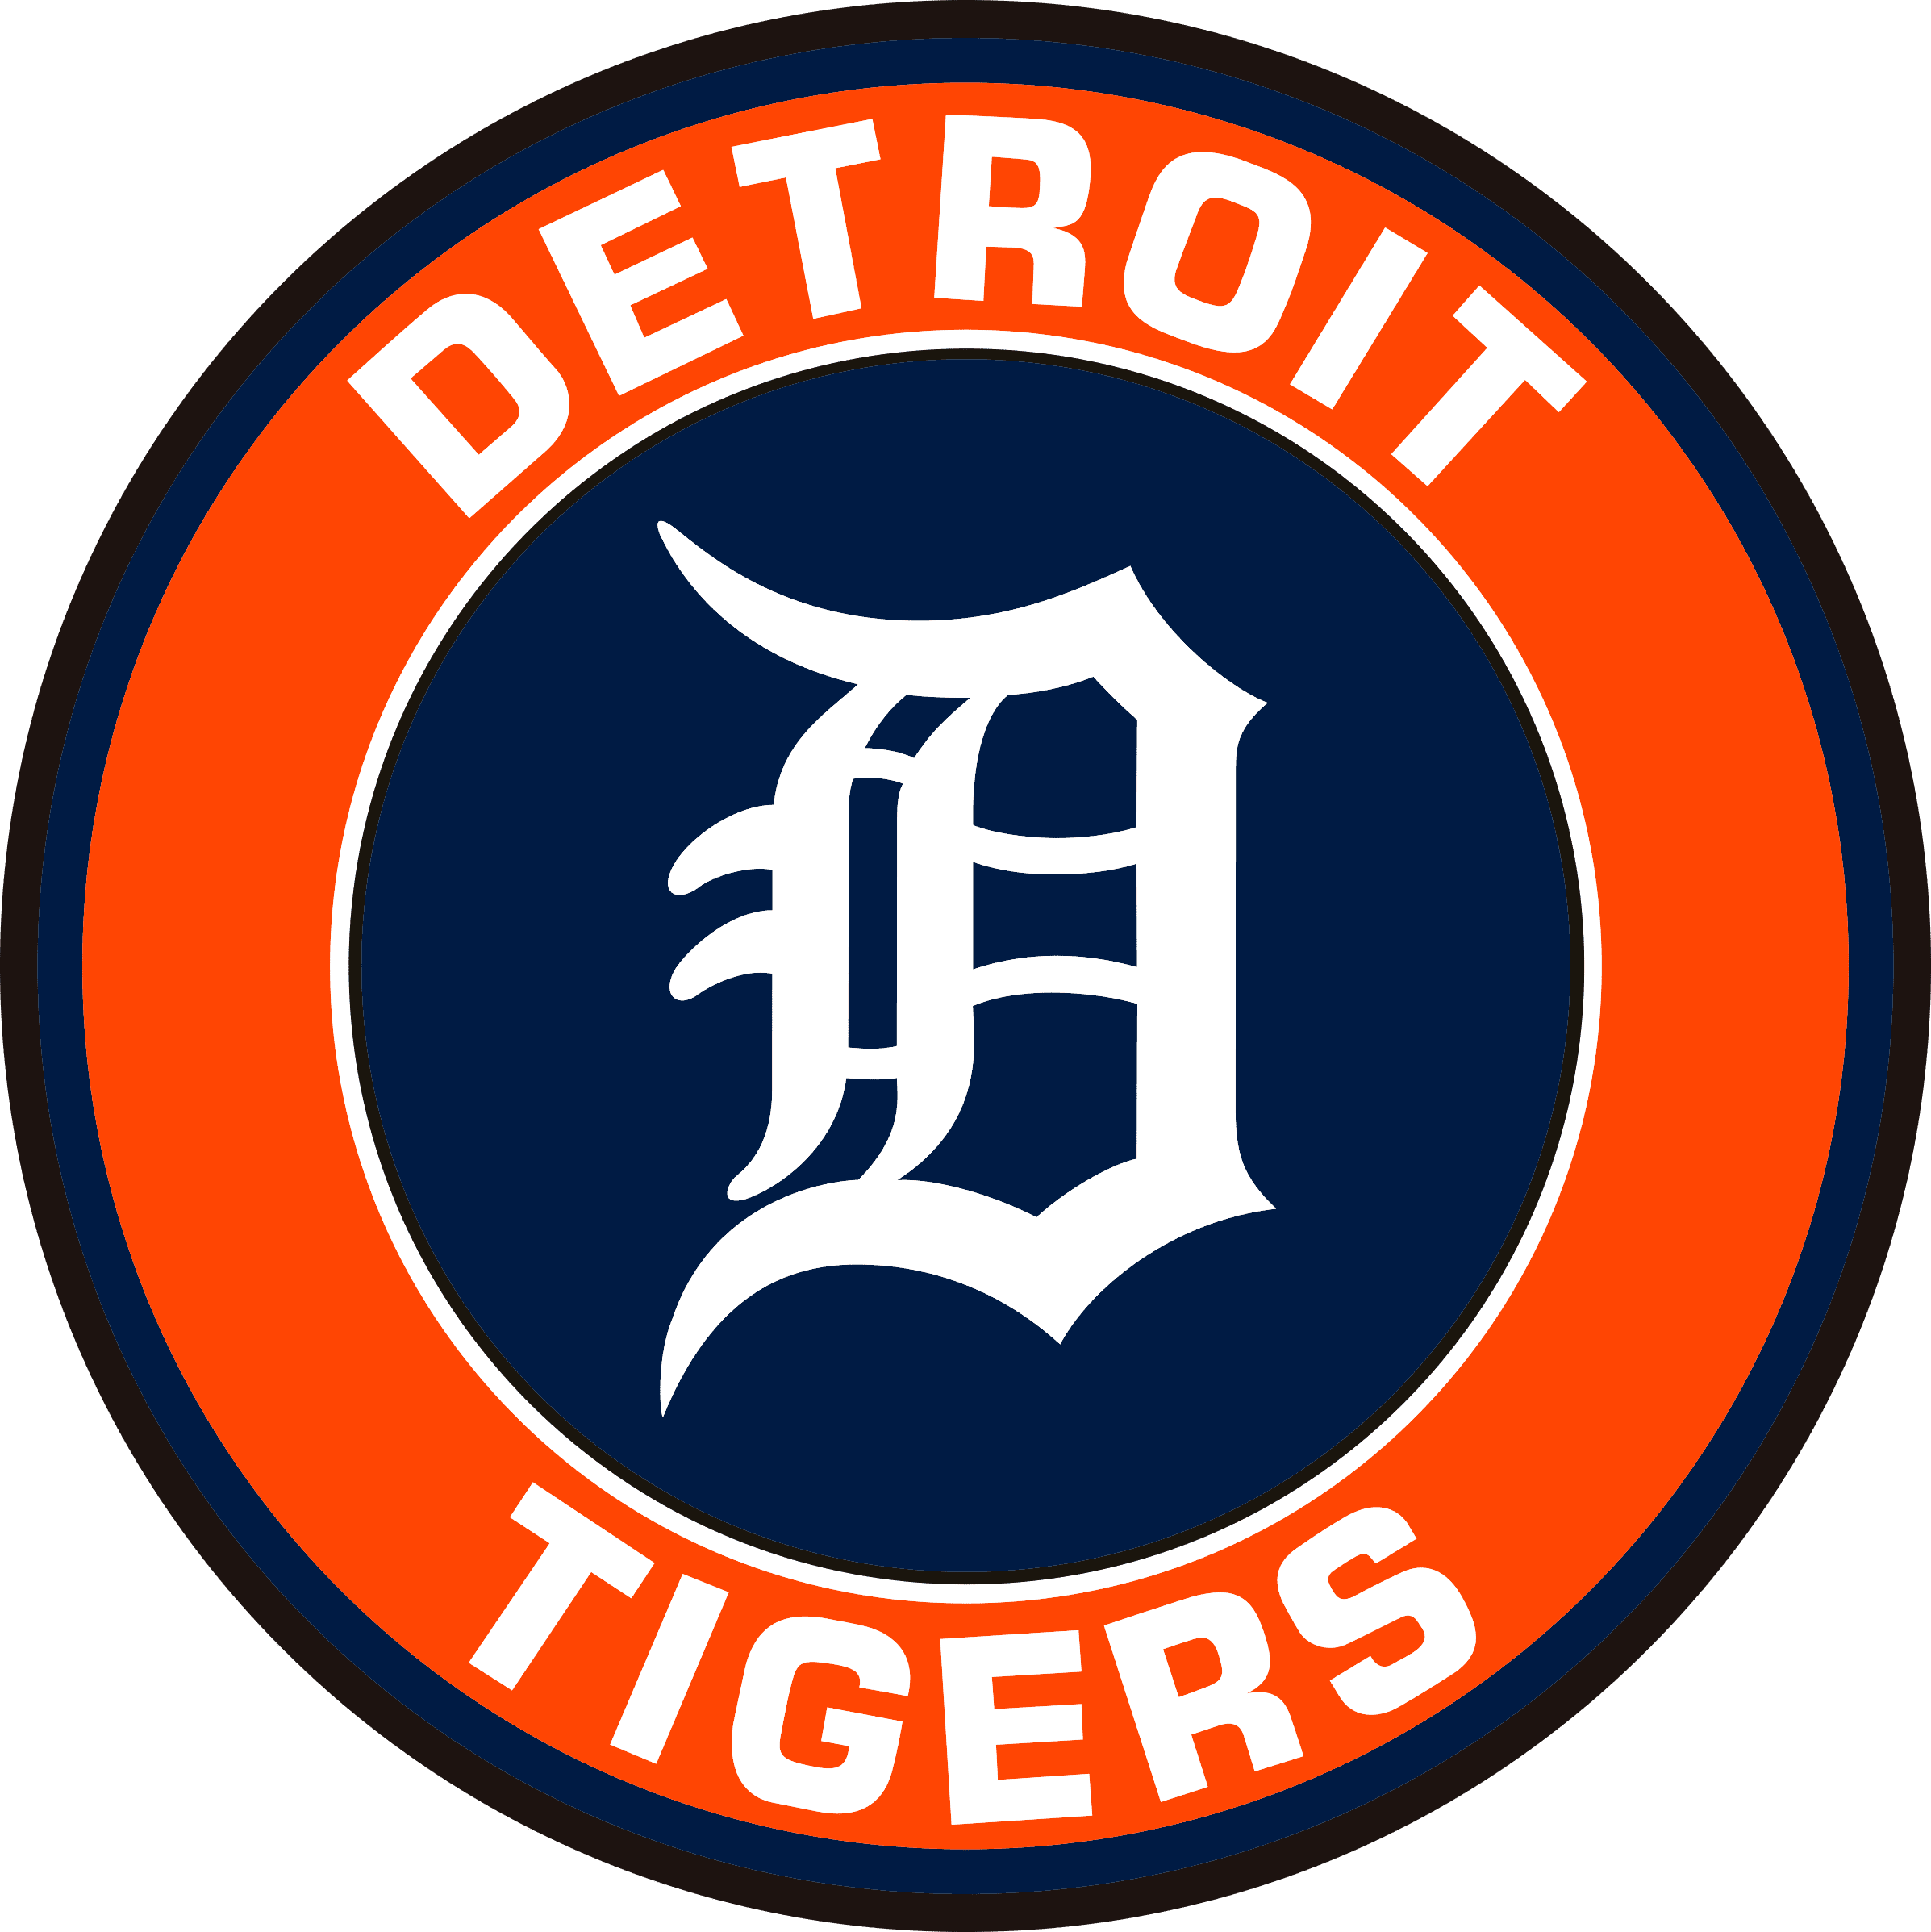 Detroit Tigers Logo PNG Image File